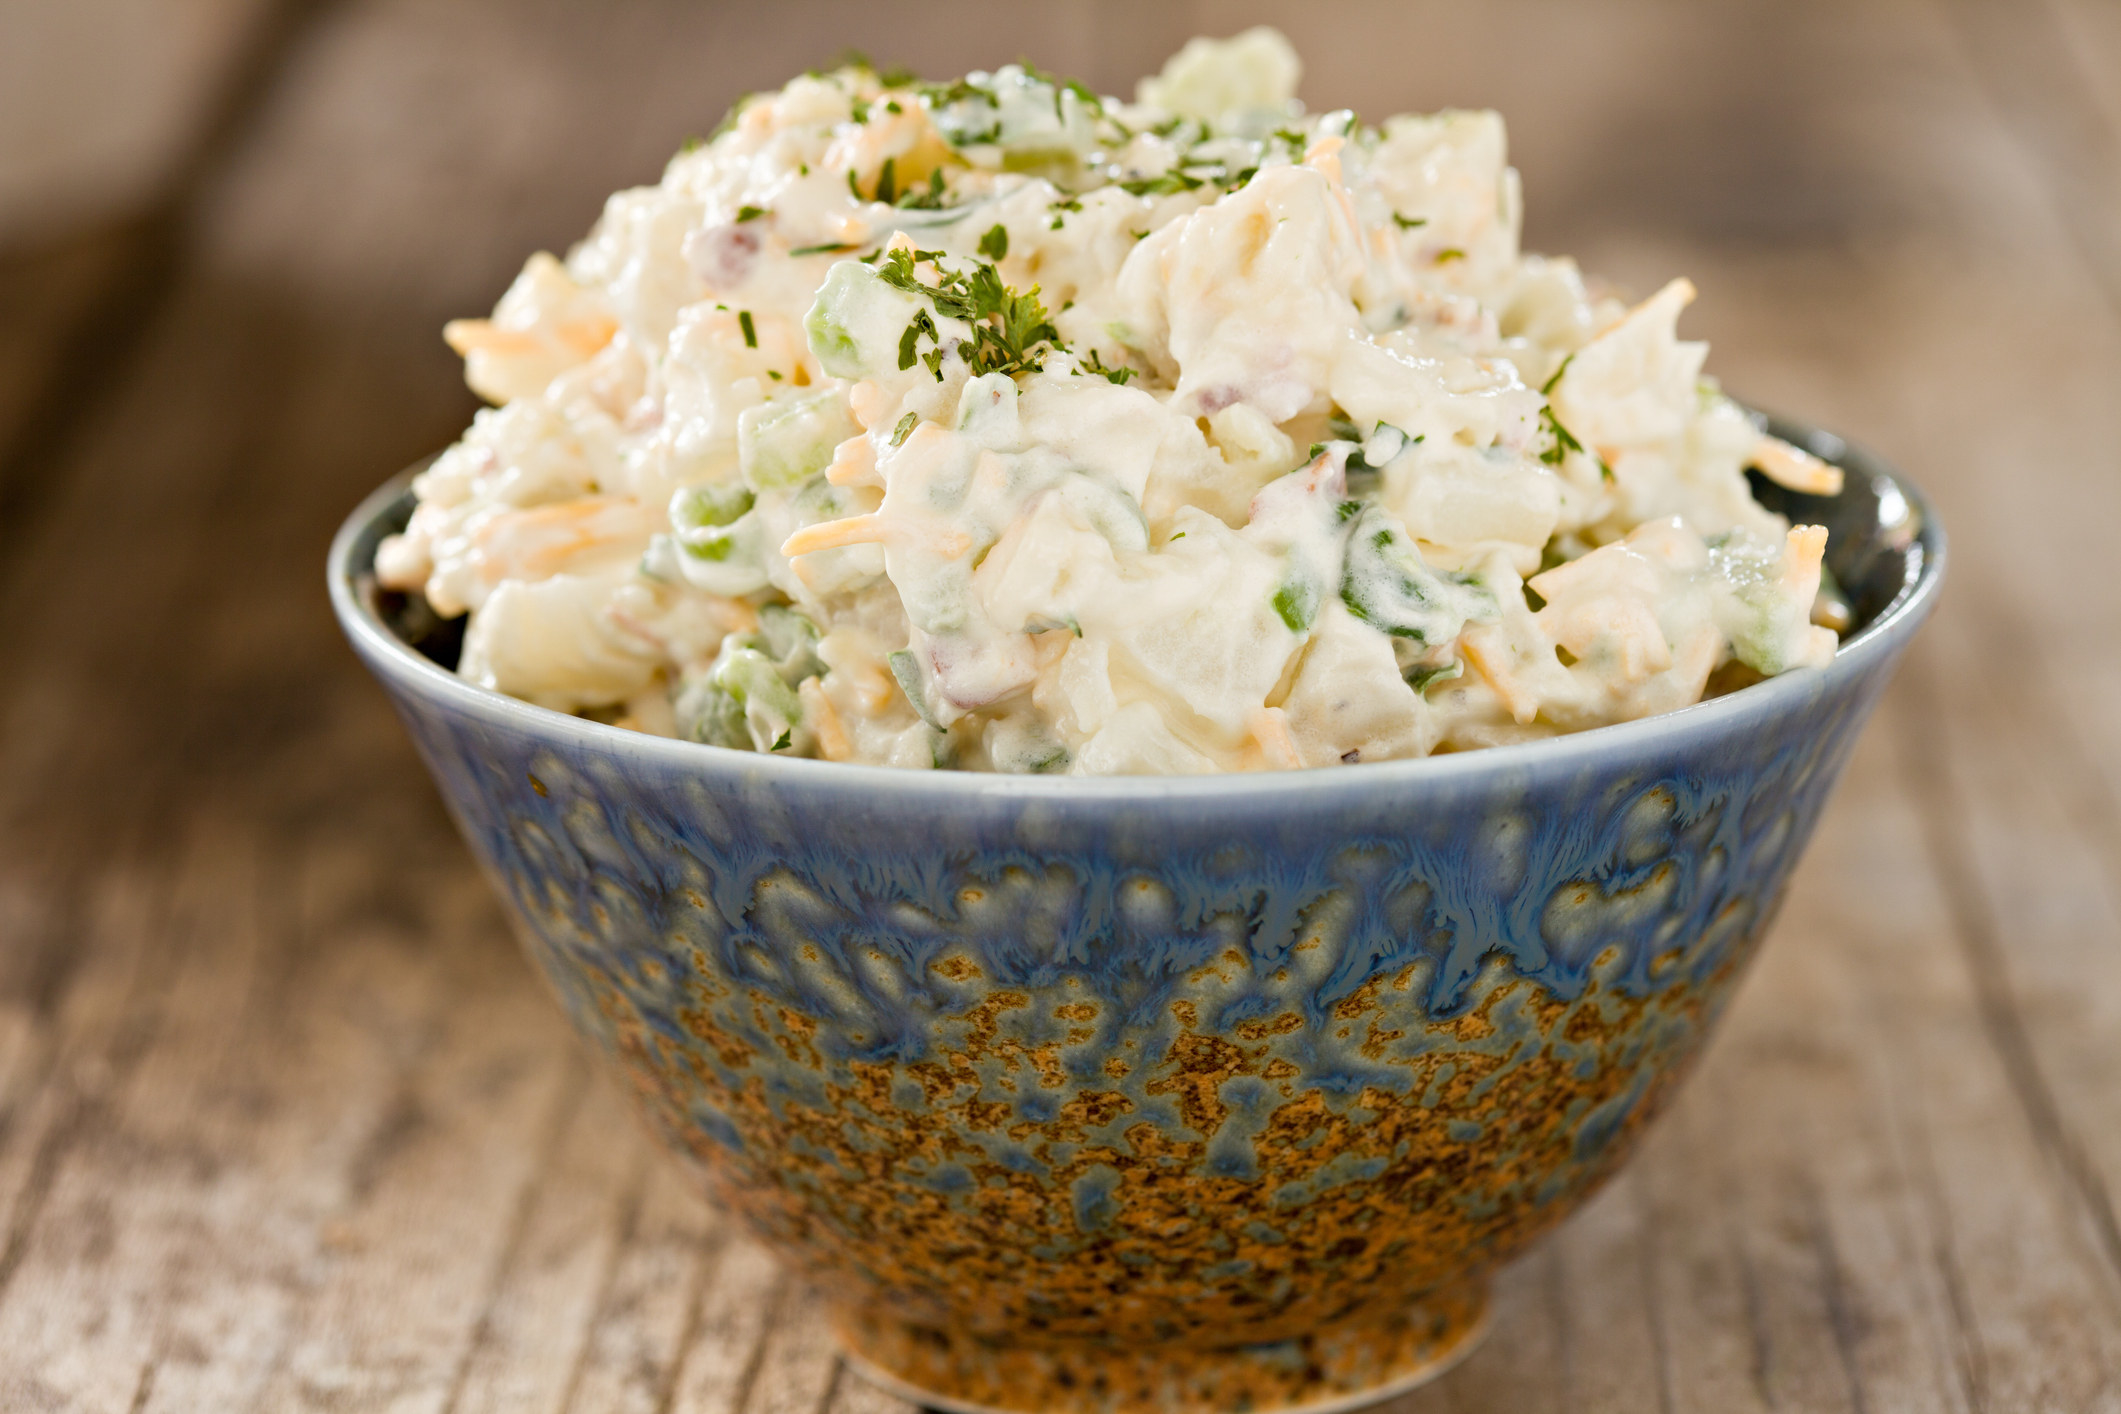 Potato salad in a blue bowl